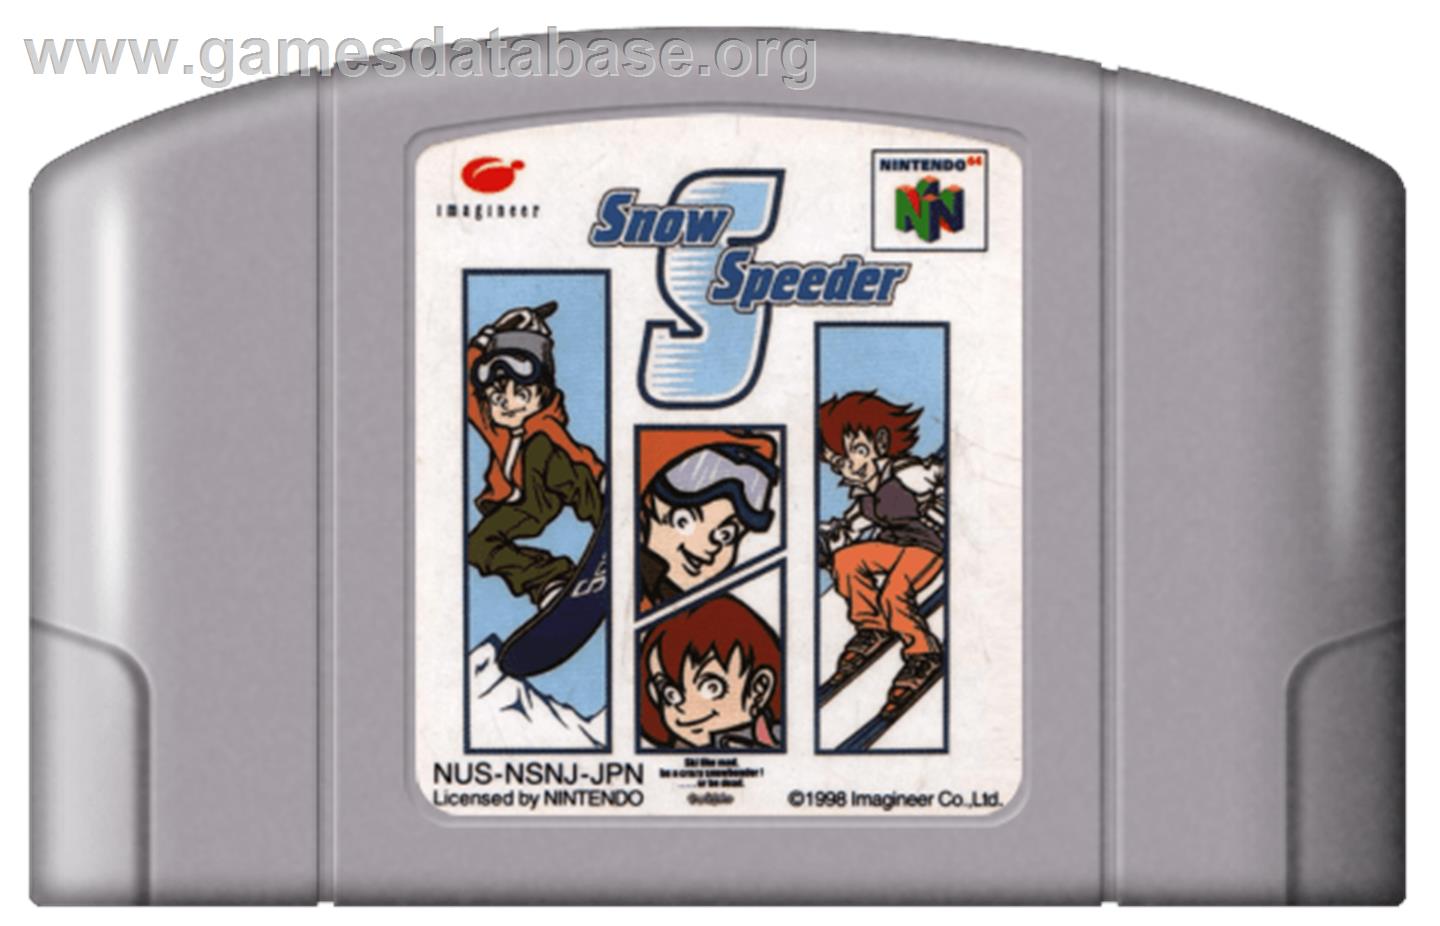 Snow Speeder - Nintendo N64 - Artwork - Cartridge